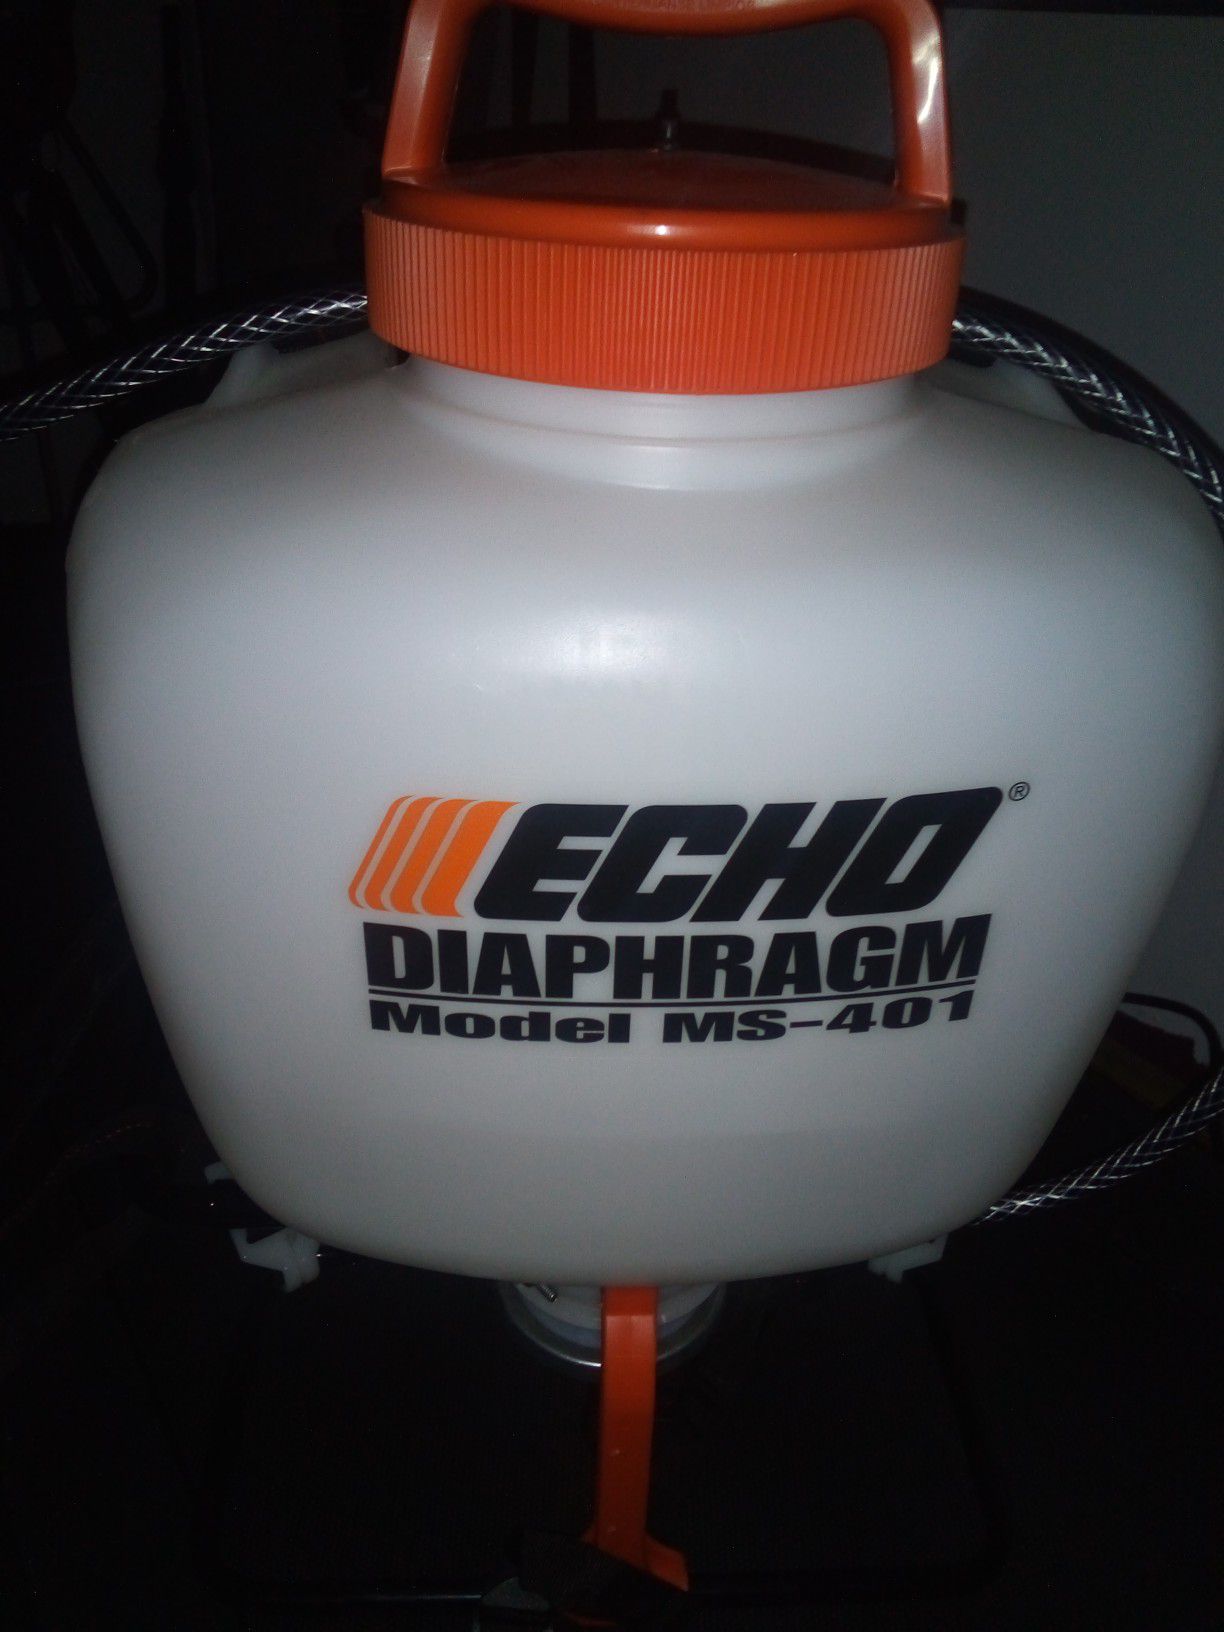 Echo diaphragm